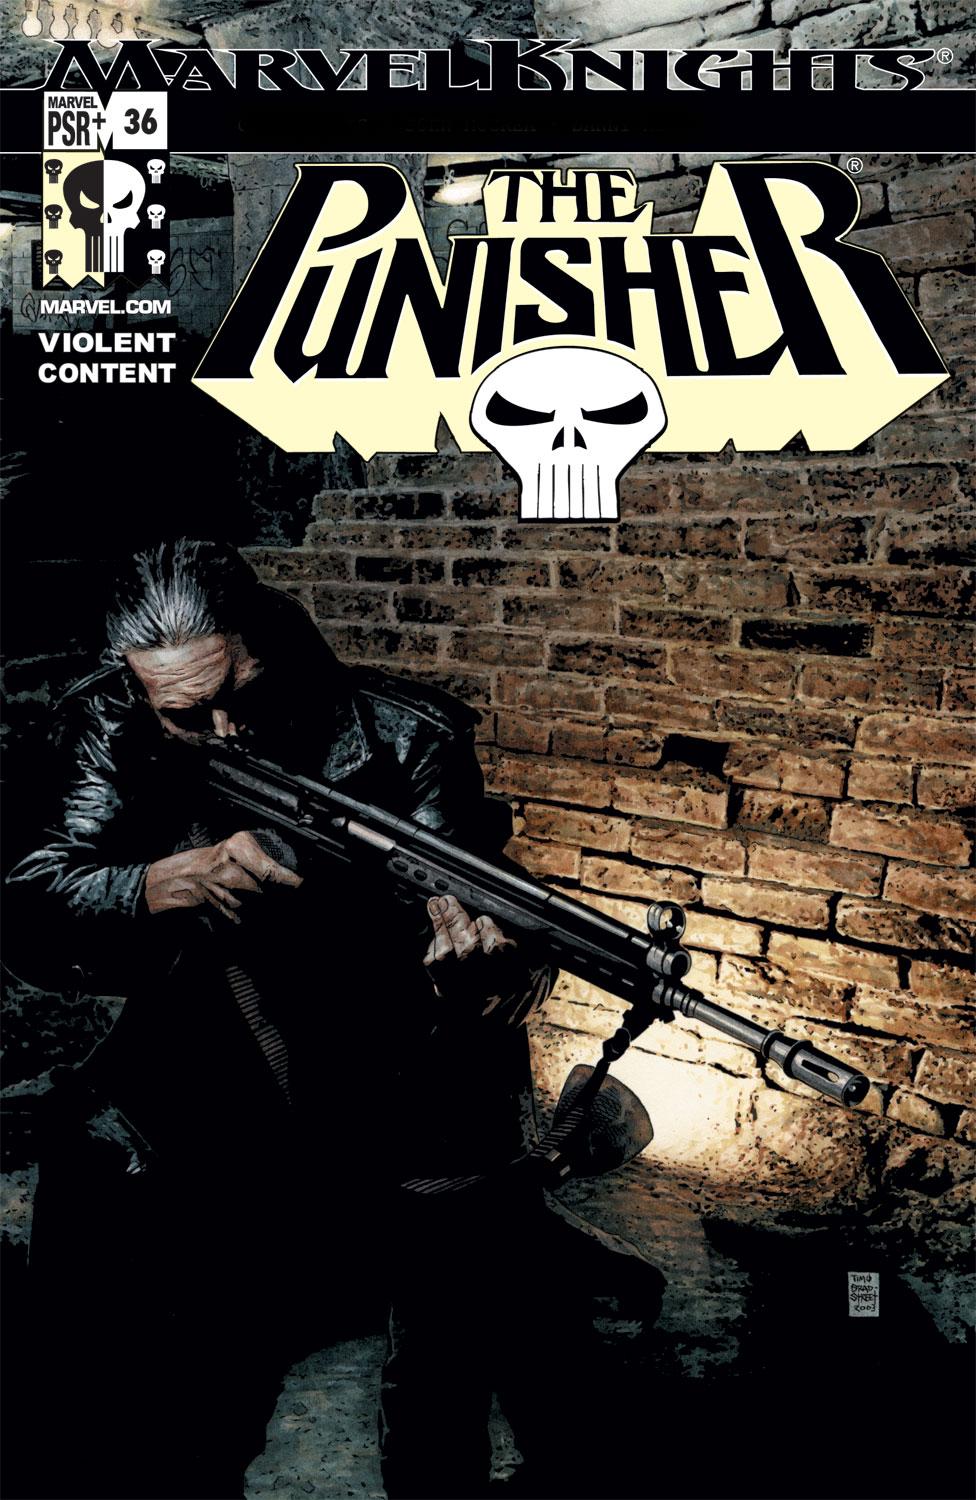 Punisher (2001) #36